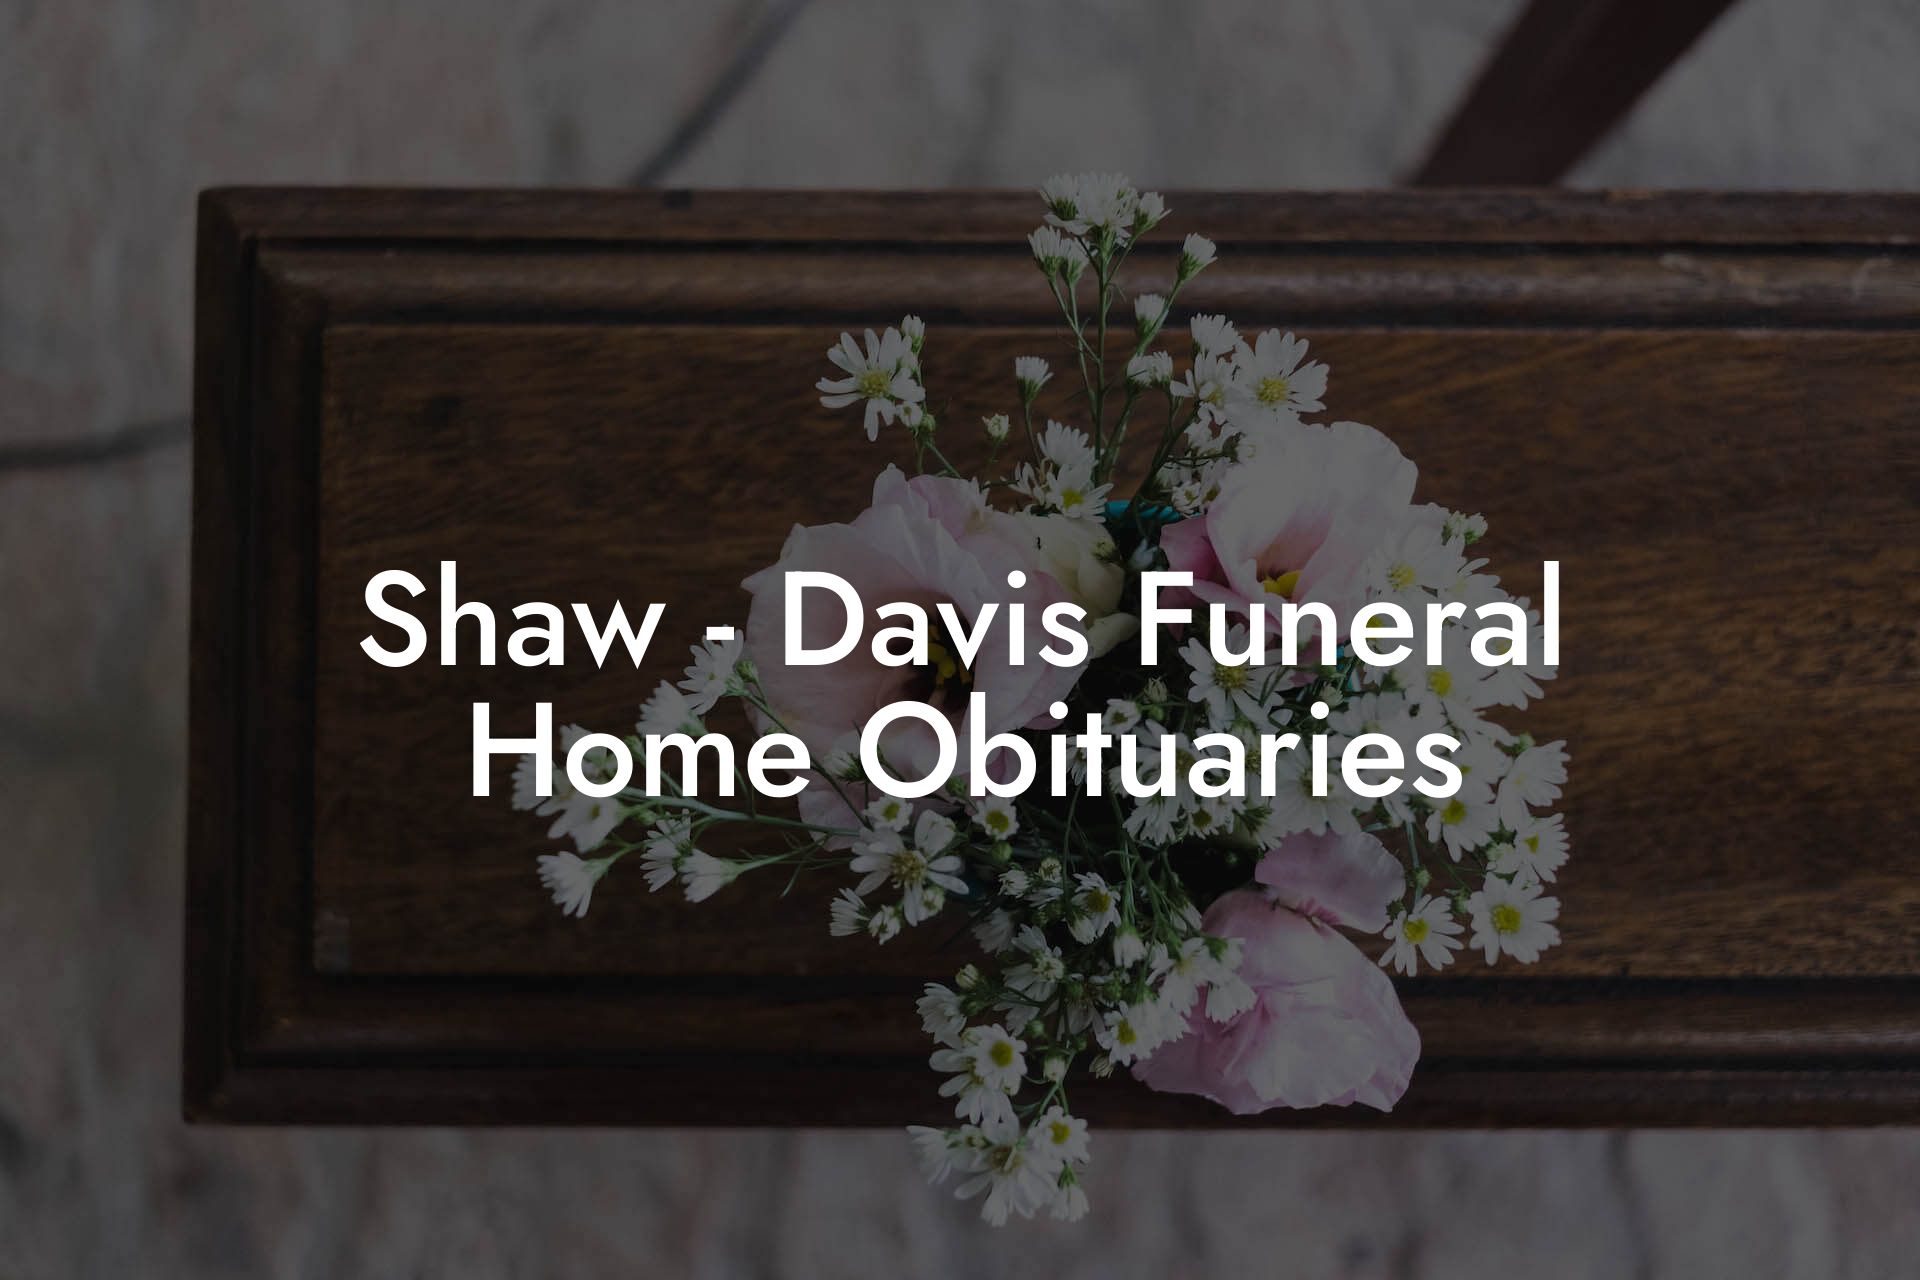 Shaw - Davis Funeral Home Obituaries